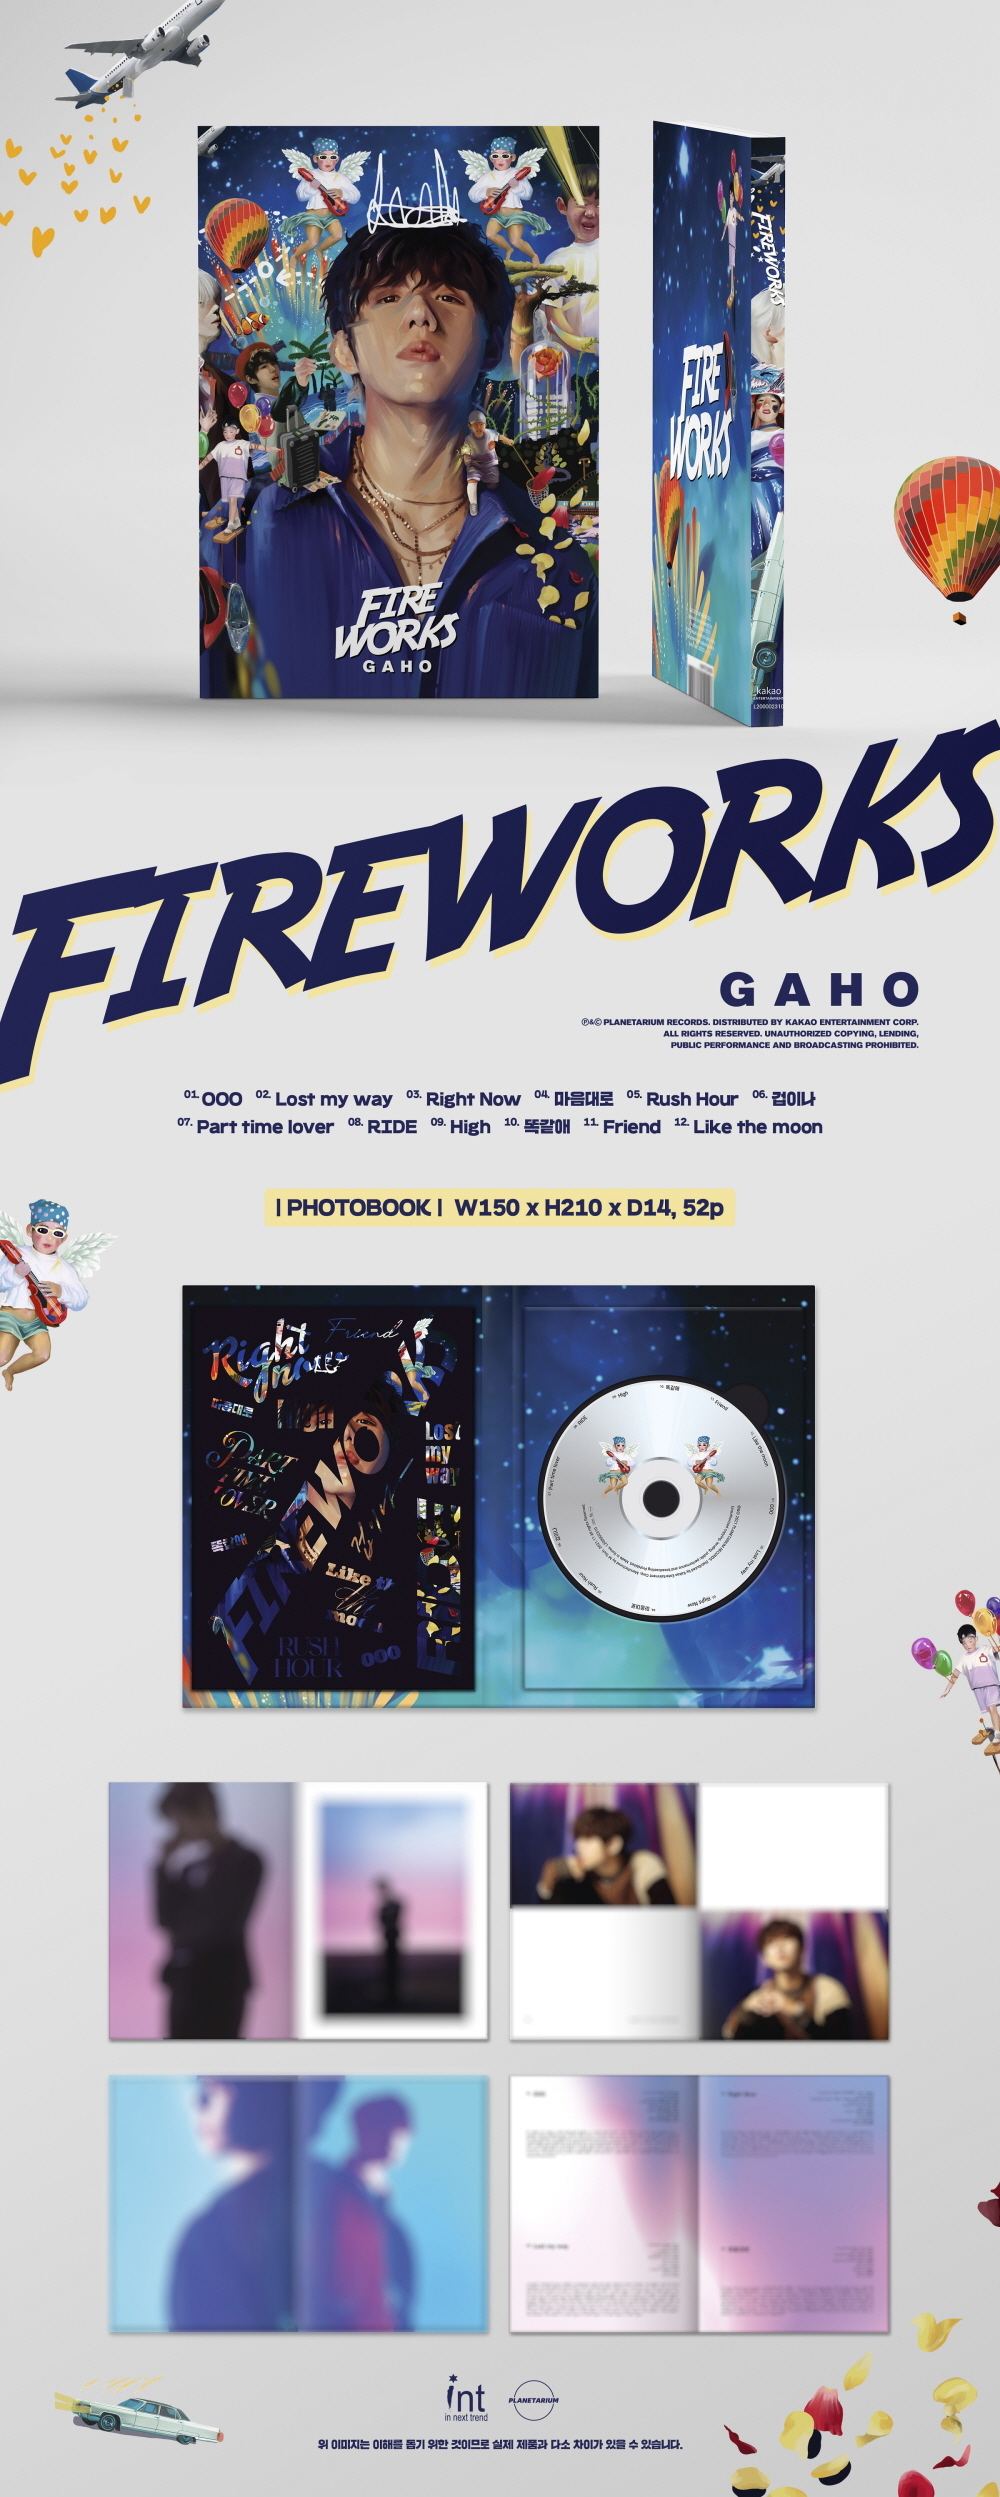 Gaho - The 1ST ALBUM [Fireworks] album gaho gahoalbum fireworks gahocd gahophotocard gahophotobook gahoposter